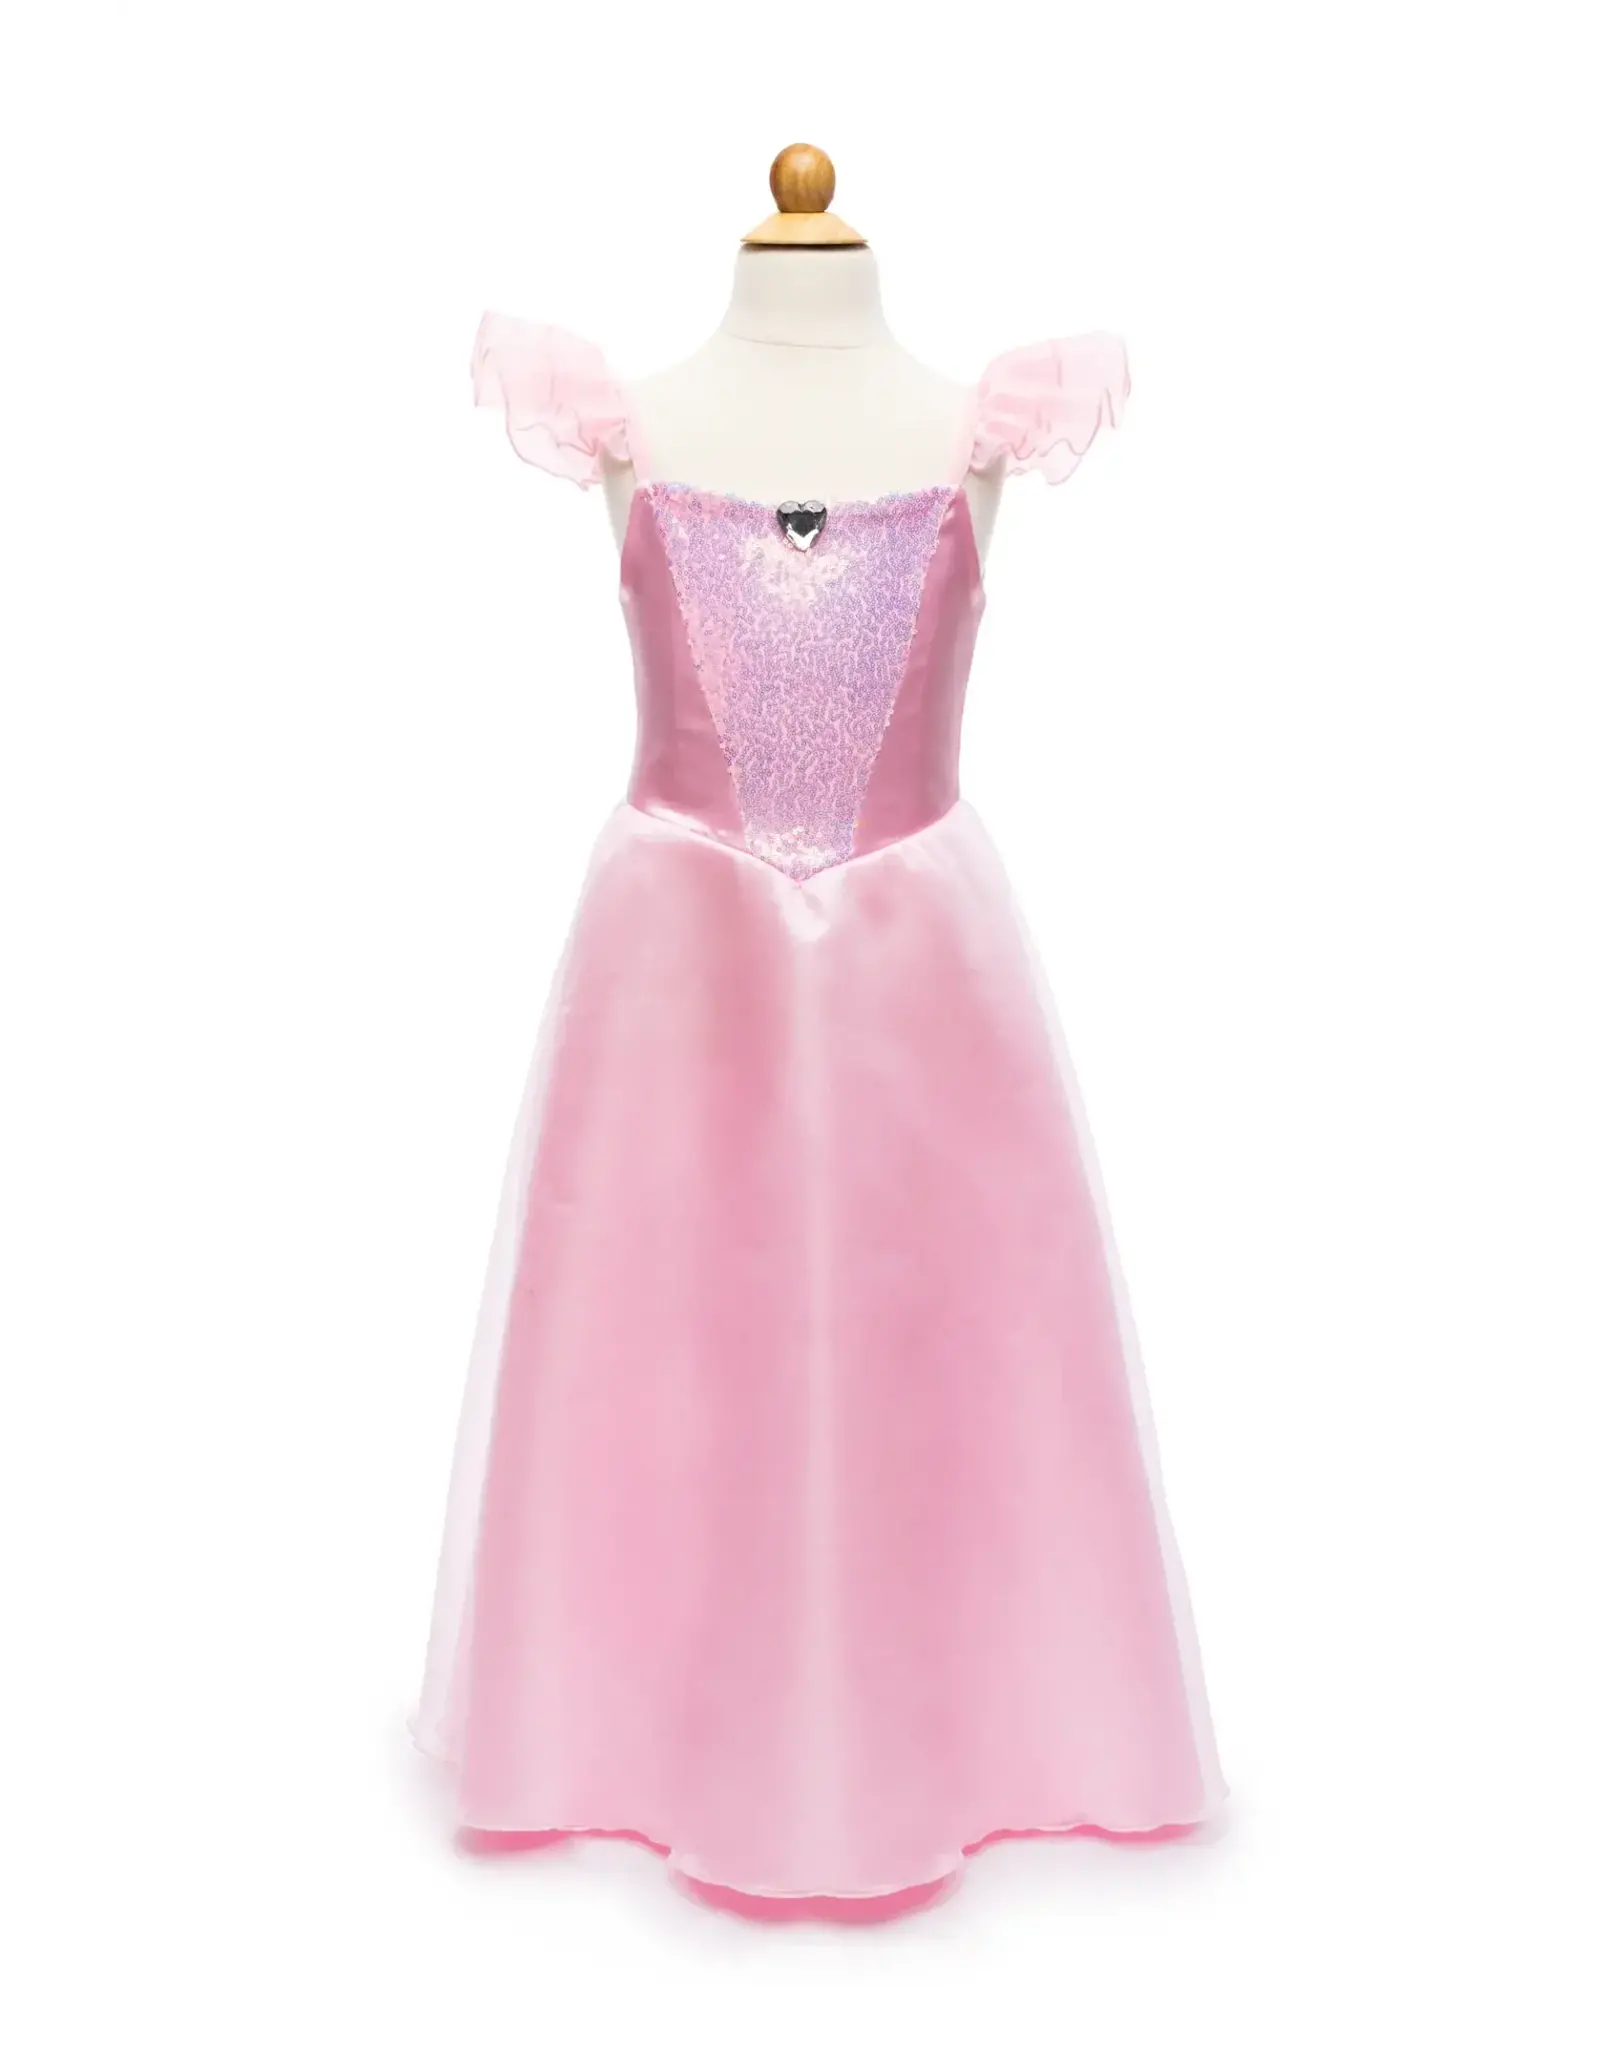 Great Pretenders Light Pink Party Princess Dress, Size 5/6